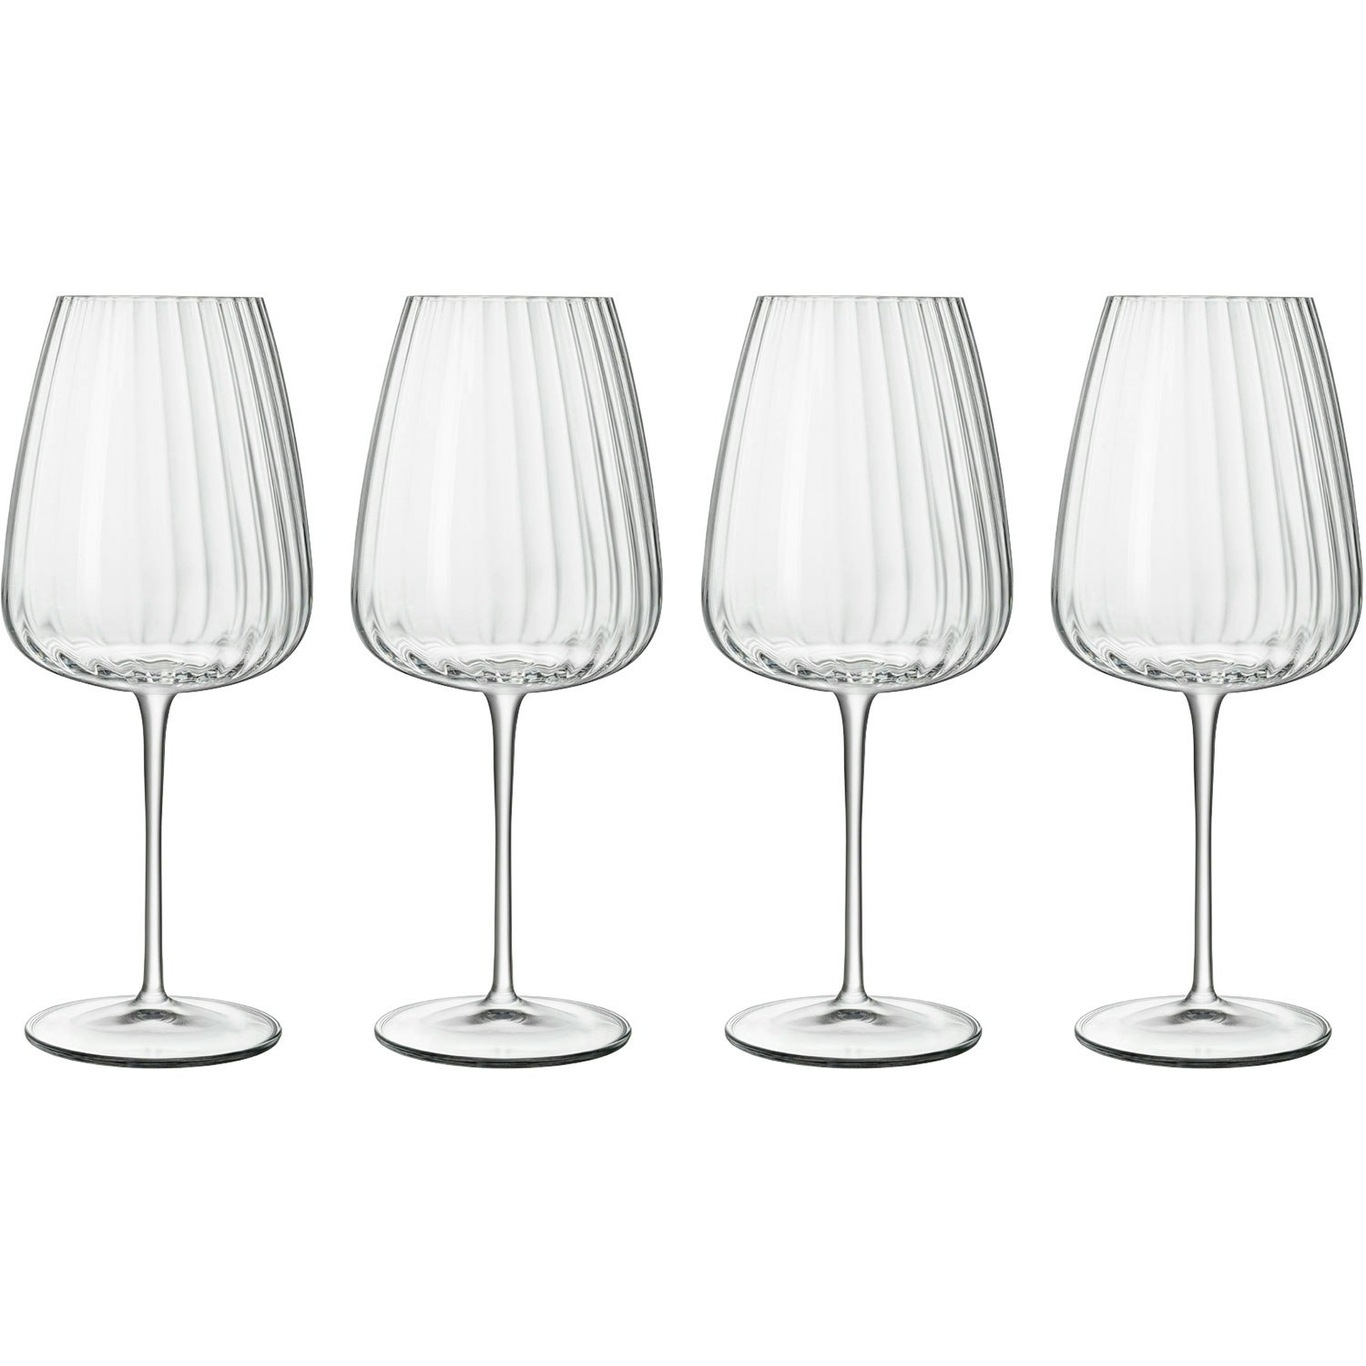 https://royaldesign.com/image/2/luigi-bormioli-red-wine-glass-bordeaux-optica-70-cl-4-pcs-1?w=800&quality=80